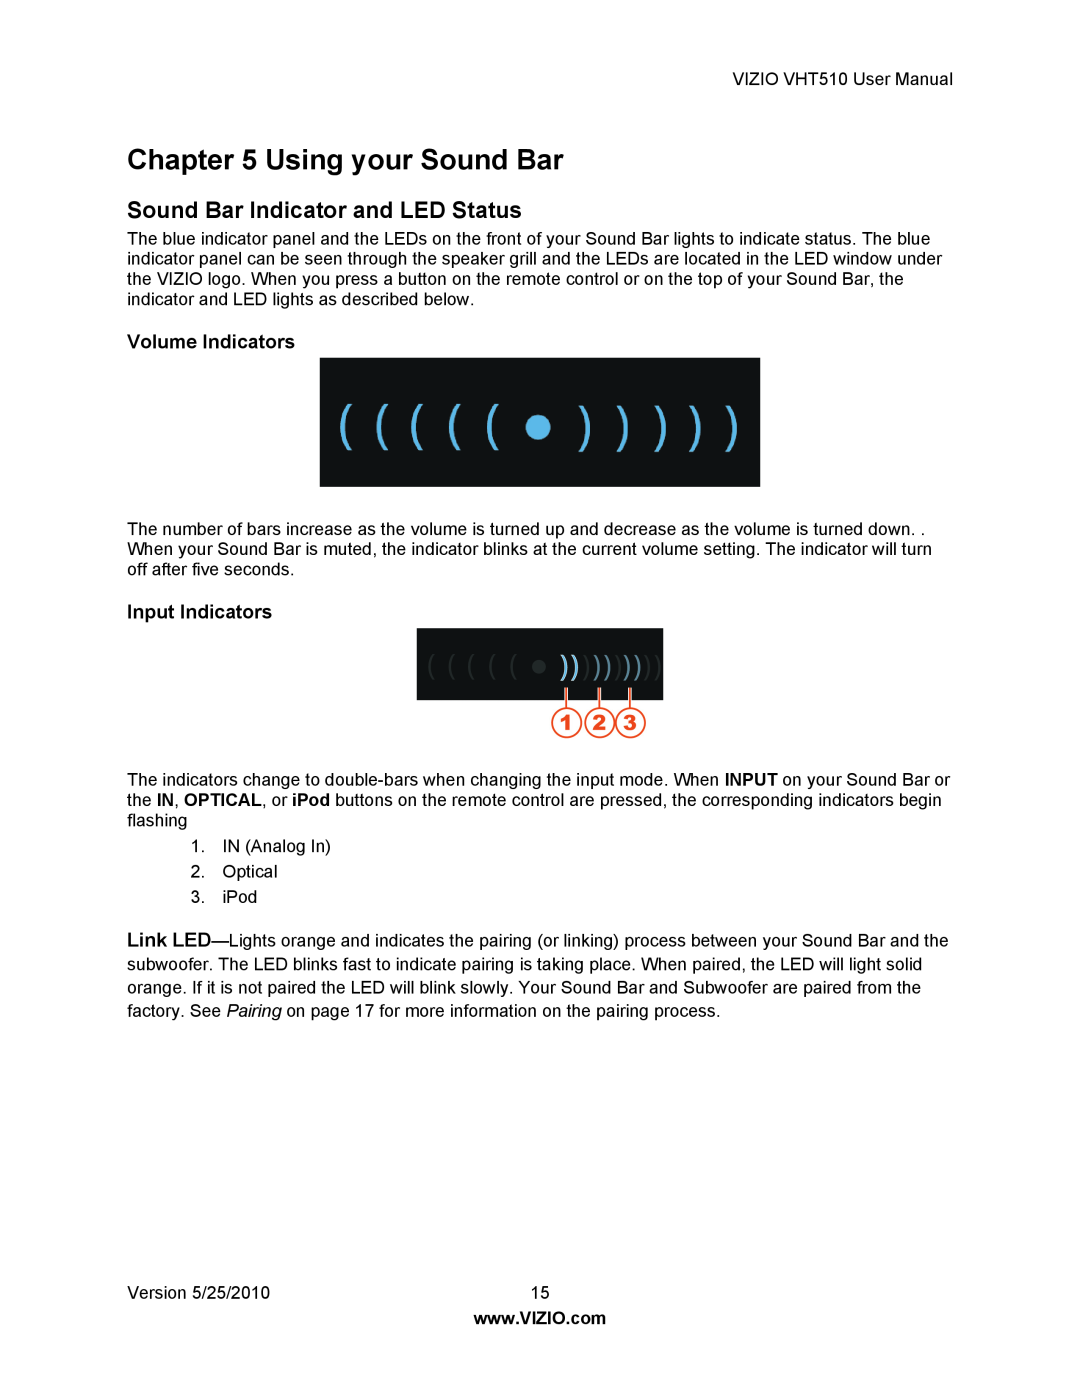 Vizio VHT510 user manual Using your Sound Bar, Sound Bar Indicator and LED Status, Volume Indicators, Input Indicators 